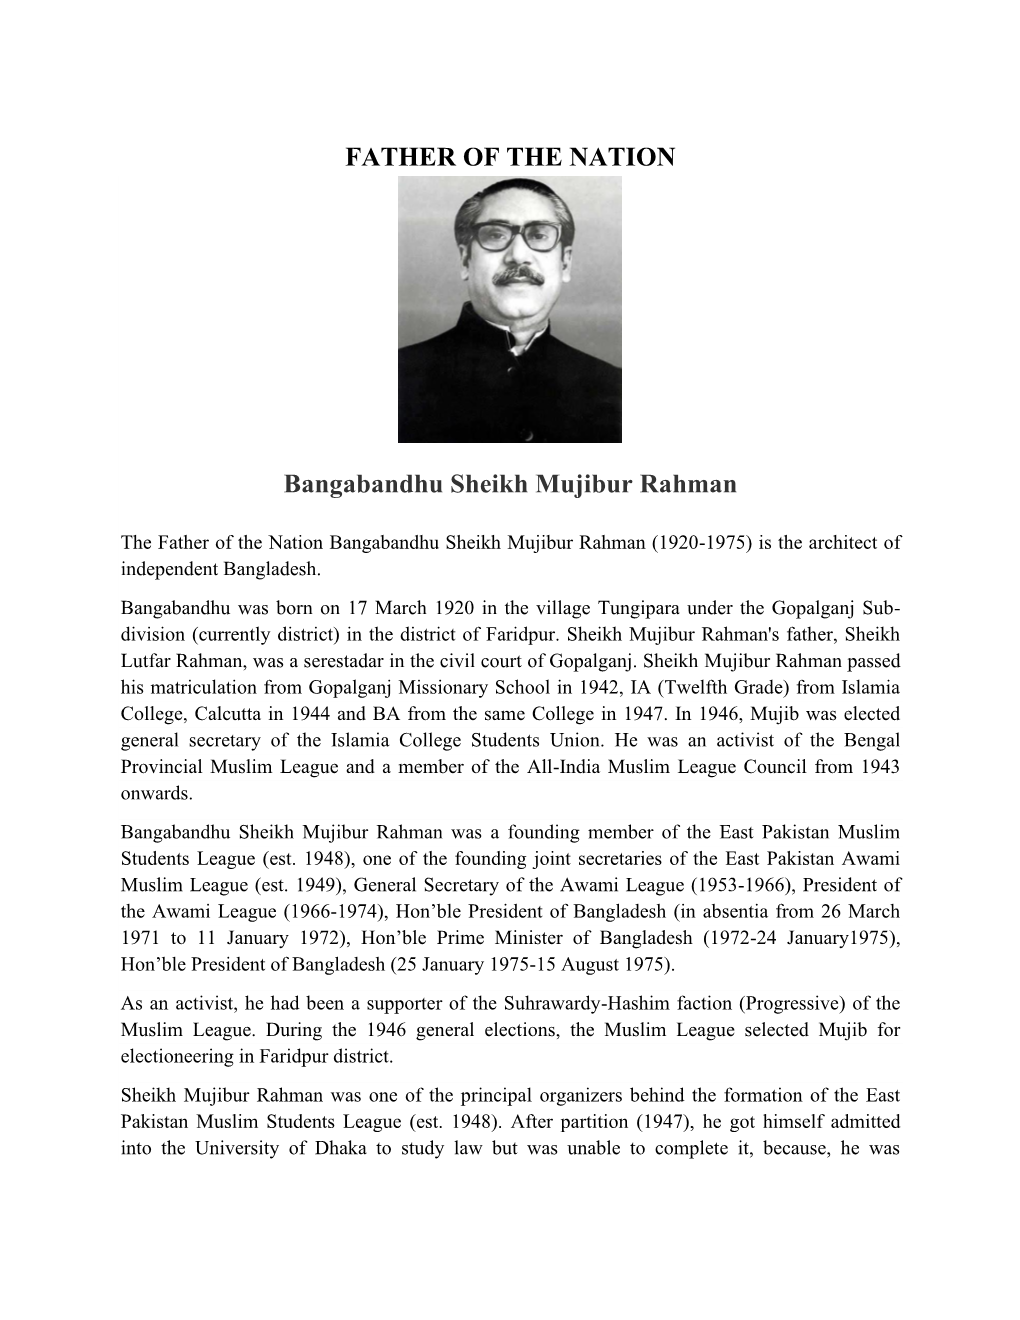 Father of the Nation Bangabandhu Sheikh Mujibur Rahman (1920-1975) Is the Architect of Independent Bangladesh